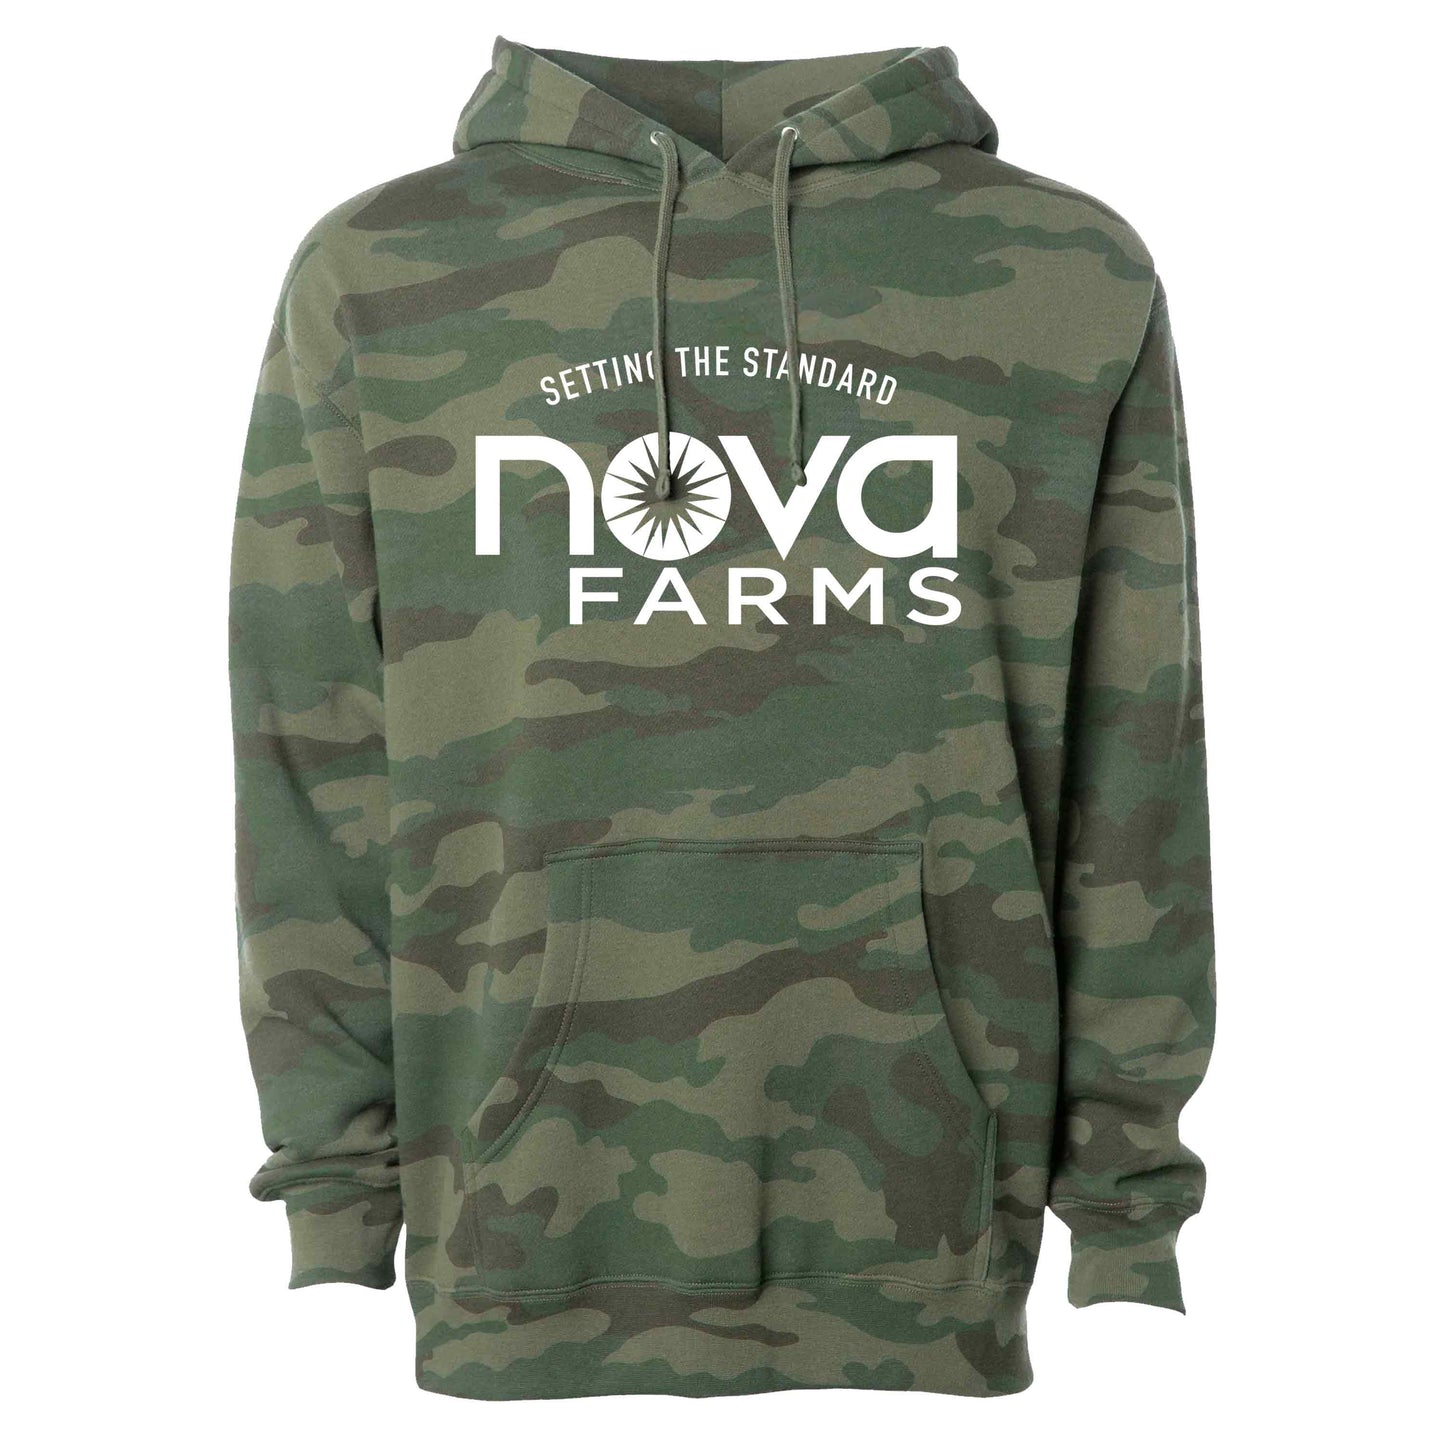 Nova Farms - Setting the Standard - Forest Camo Sweatshirt